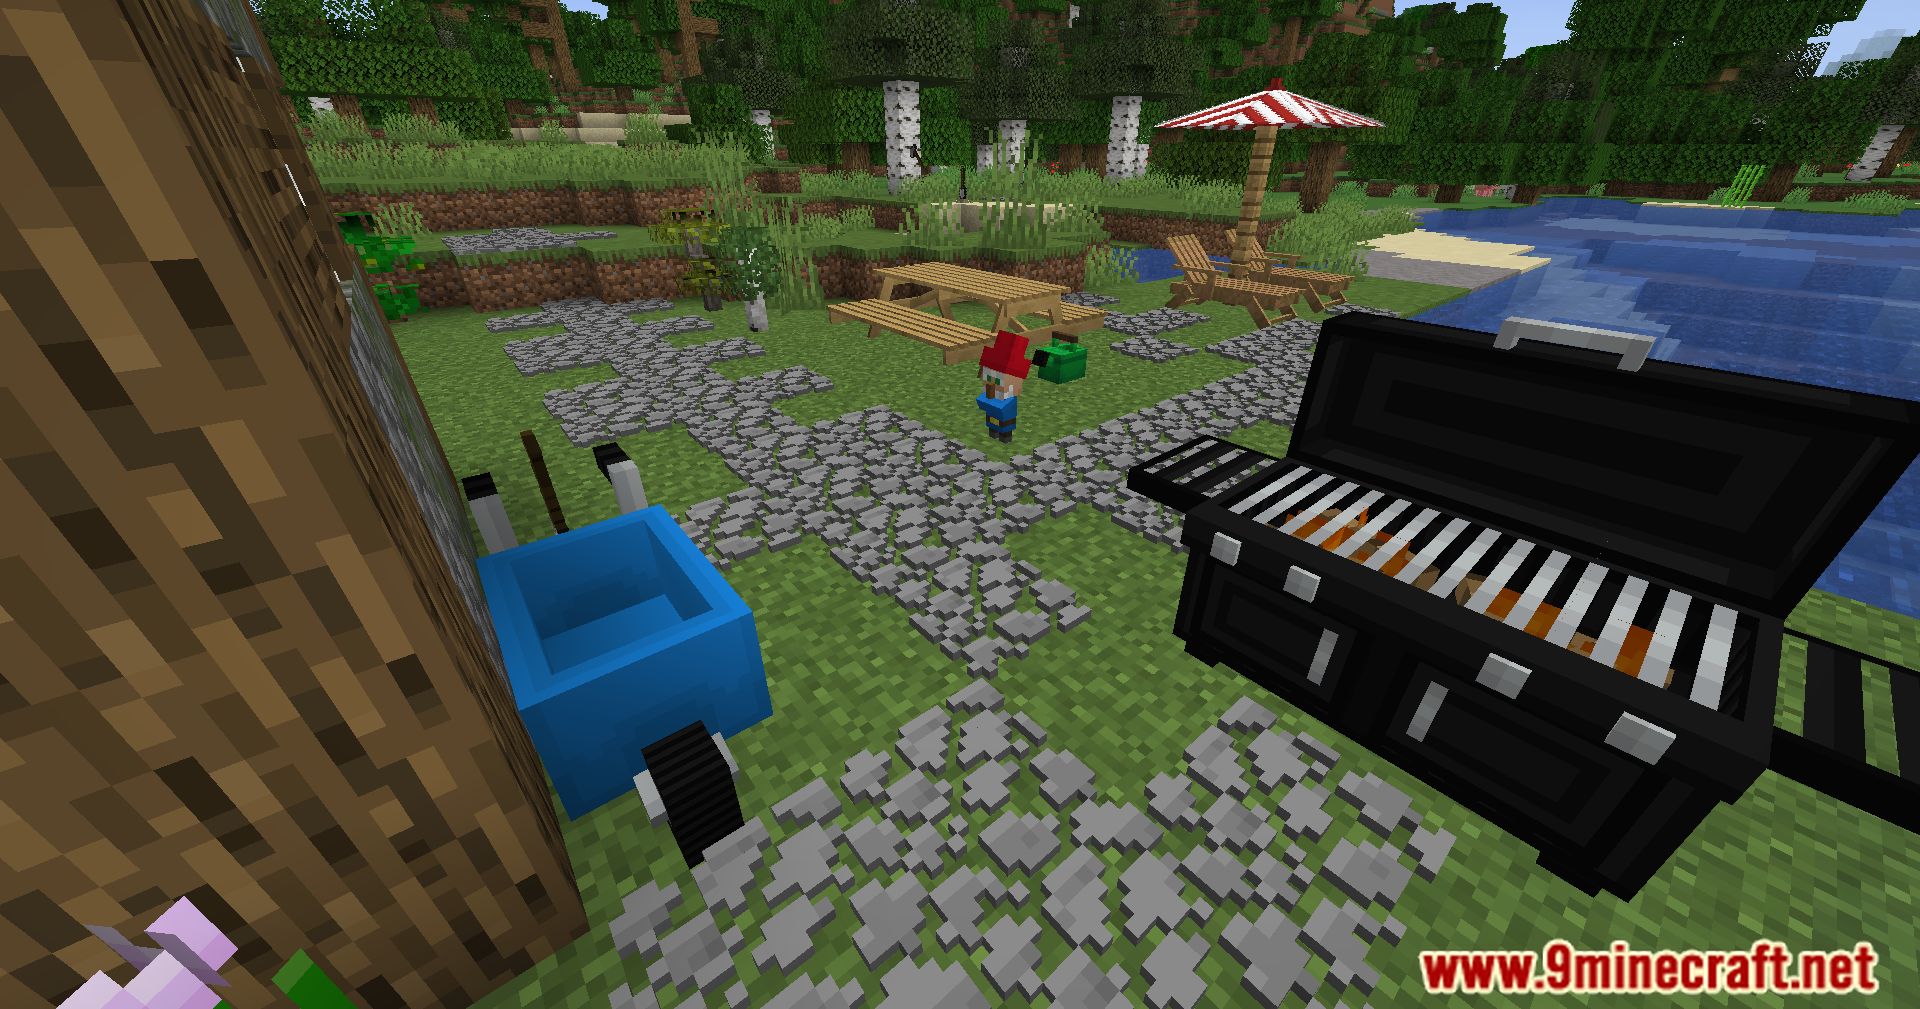 Moa Decor Garden Mod (1.20.1, 1.19.4) - Cultivate Creativity In Your Minecraft World! 9